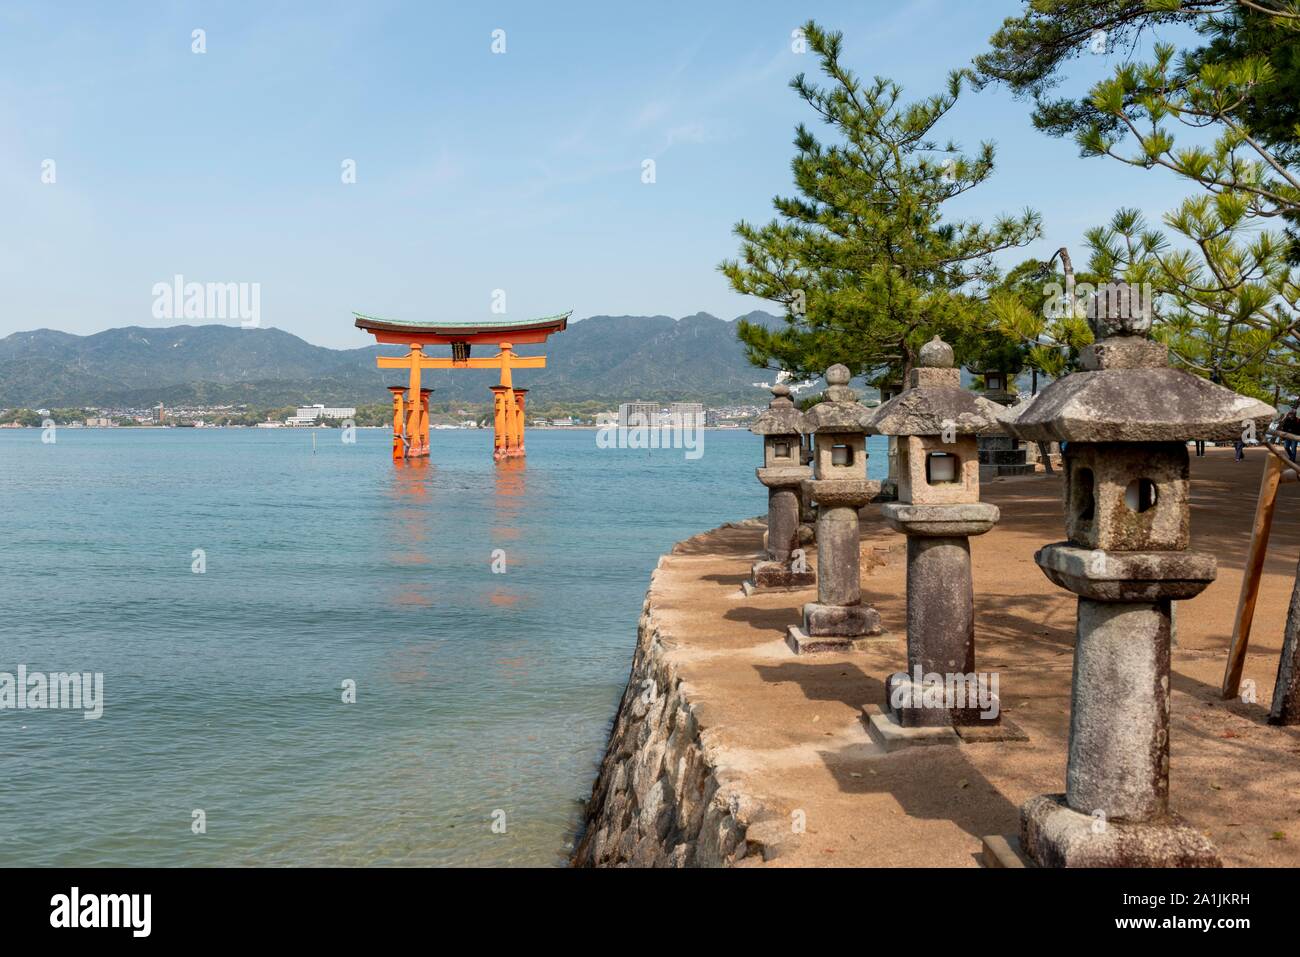 Itsukushima Floating Torii Gate in acqua, Isukushima Santuario, l'isola di Miyajima, Baia di Hiroshima, Giappone Foto Stock